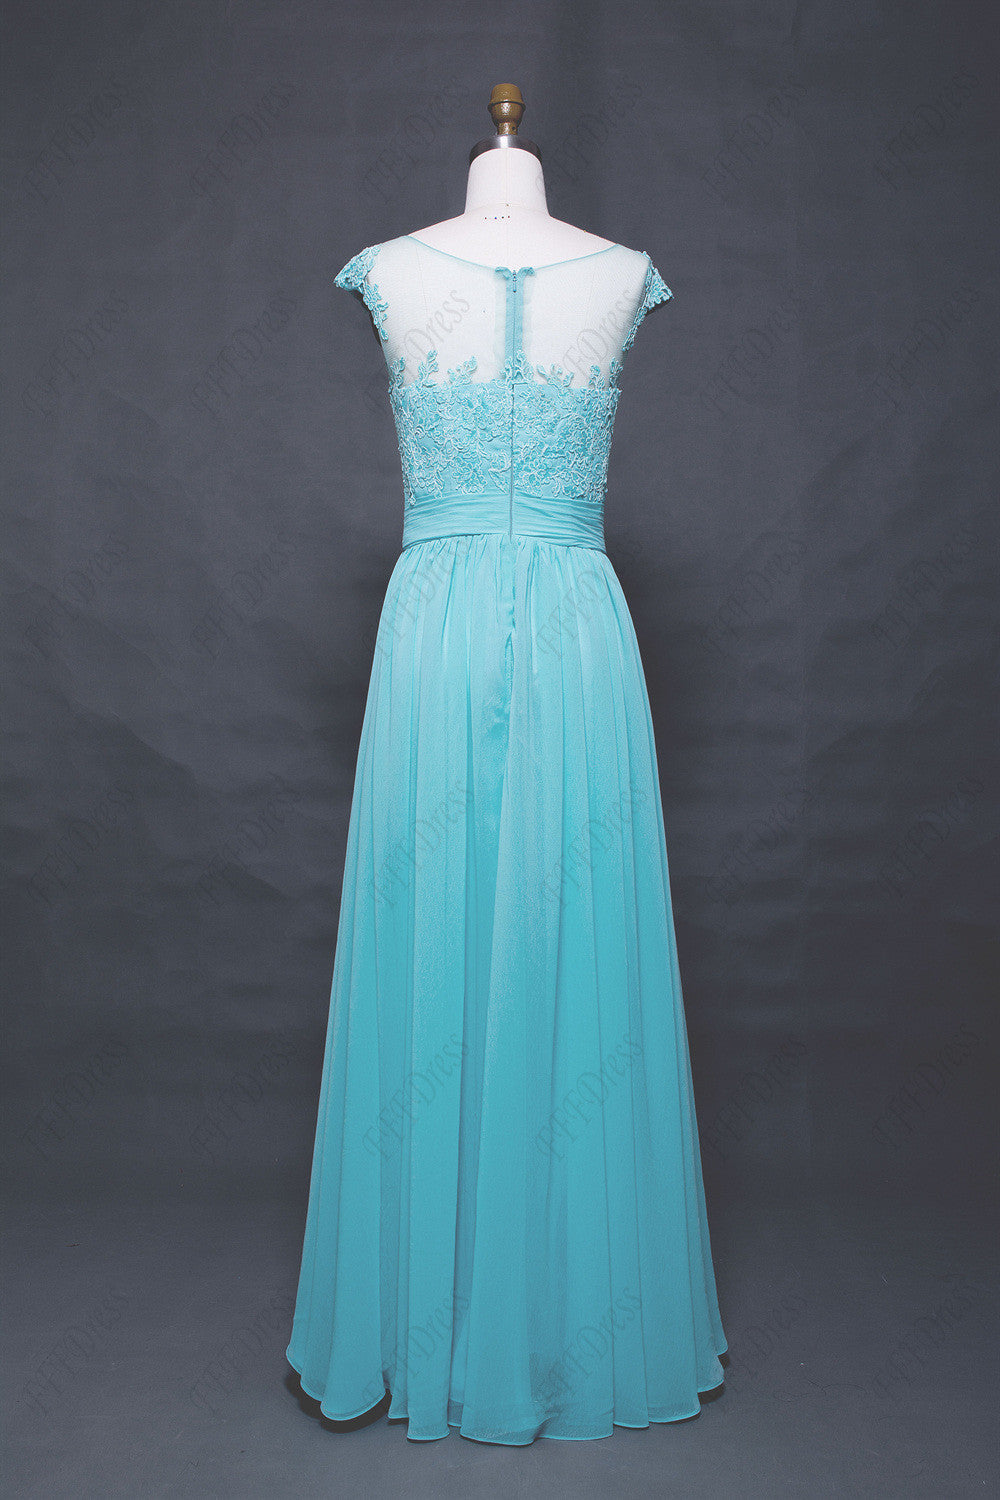 Light aqua blue long prom dresses cap sleeves